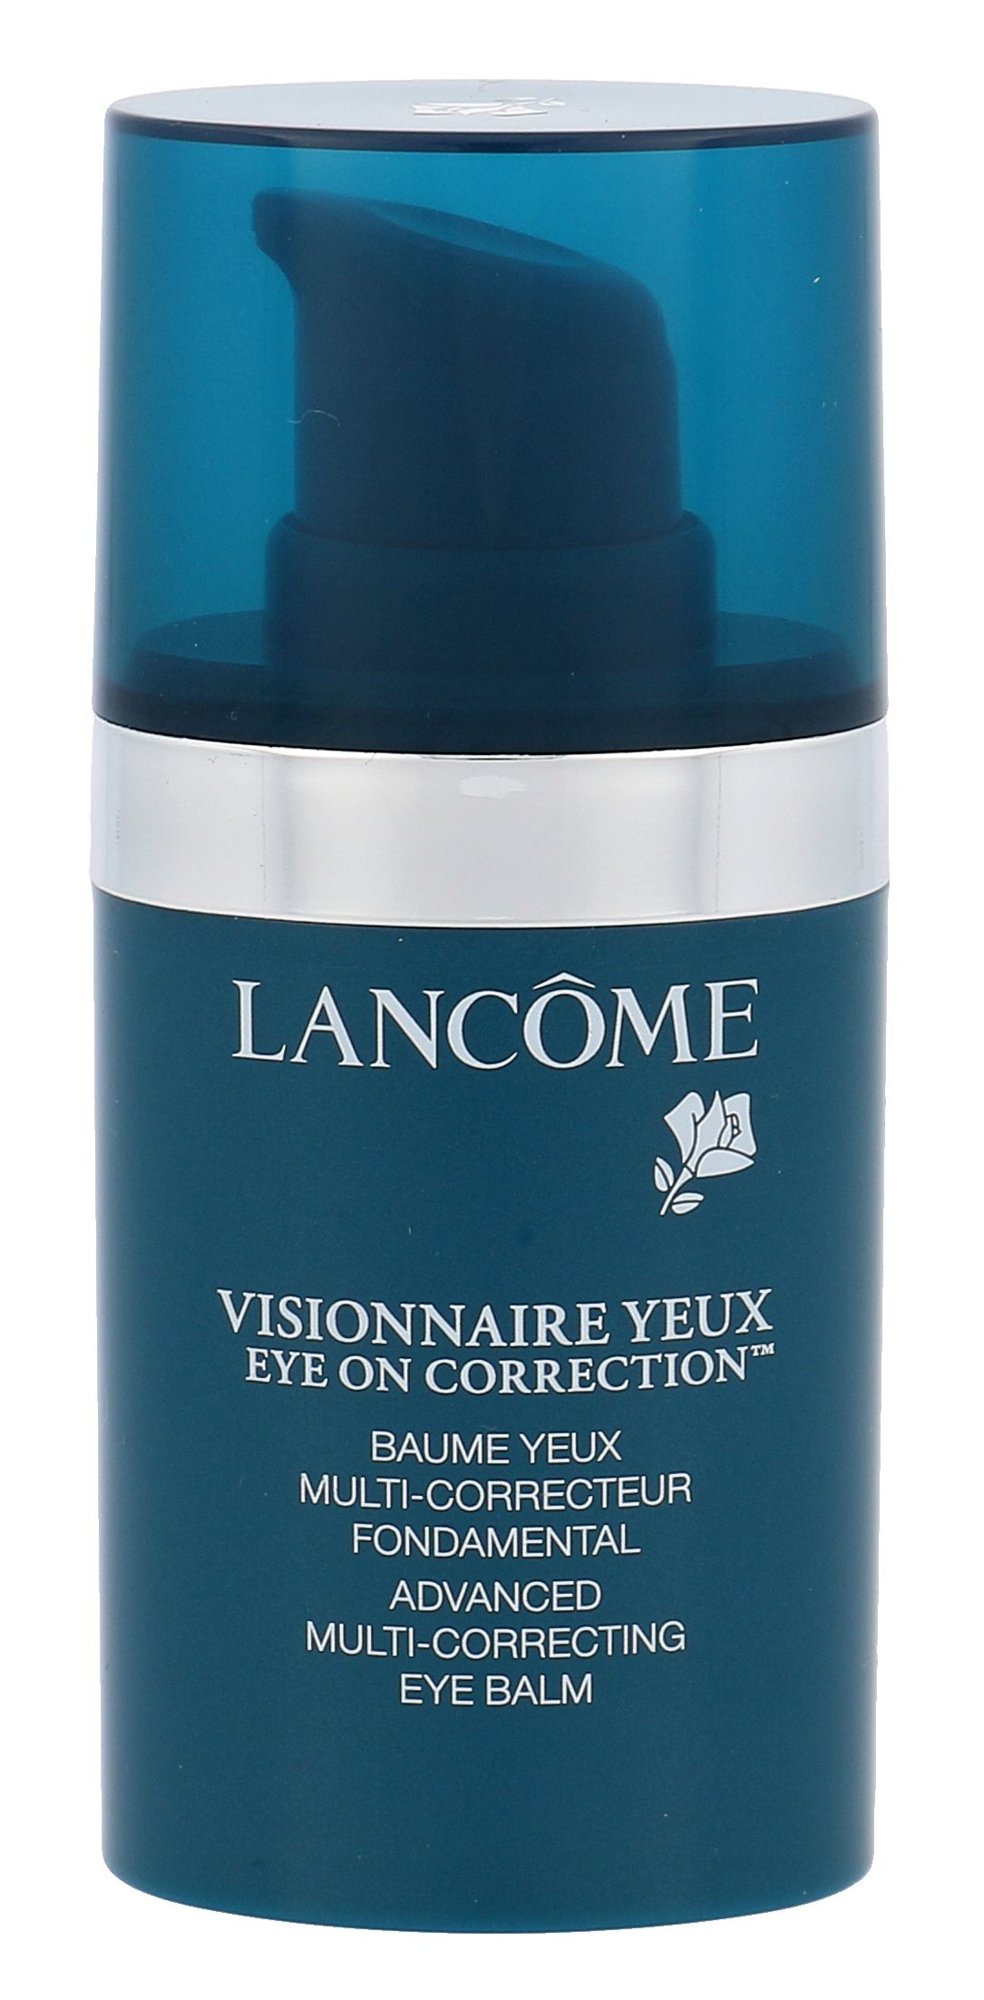 Lancome Visionnaire Yeux Advanced Multi-Correcting paakių kremas